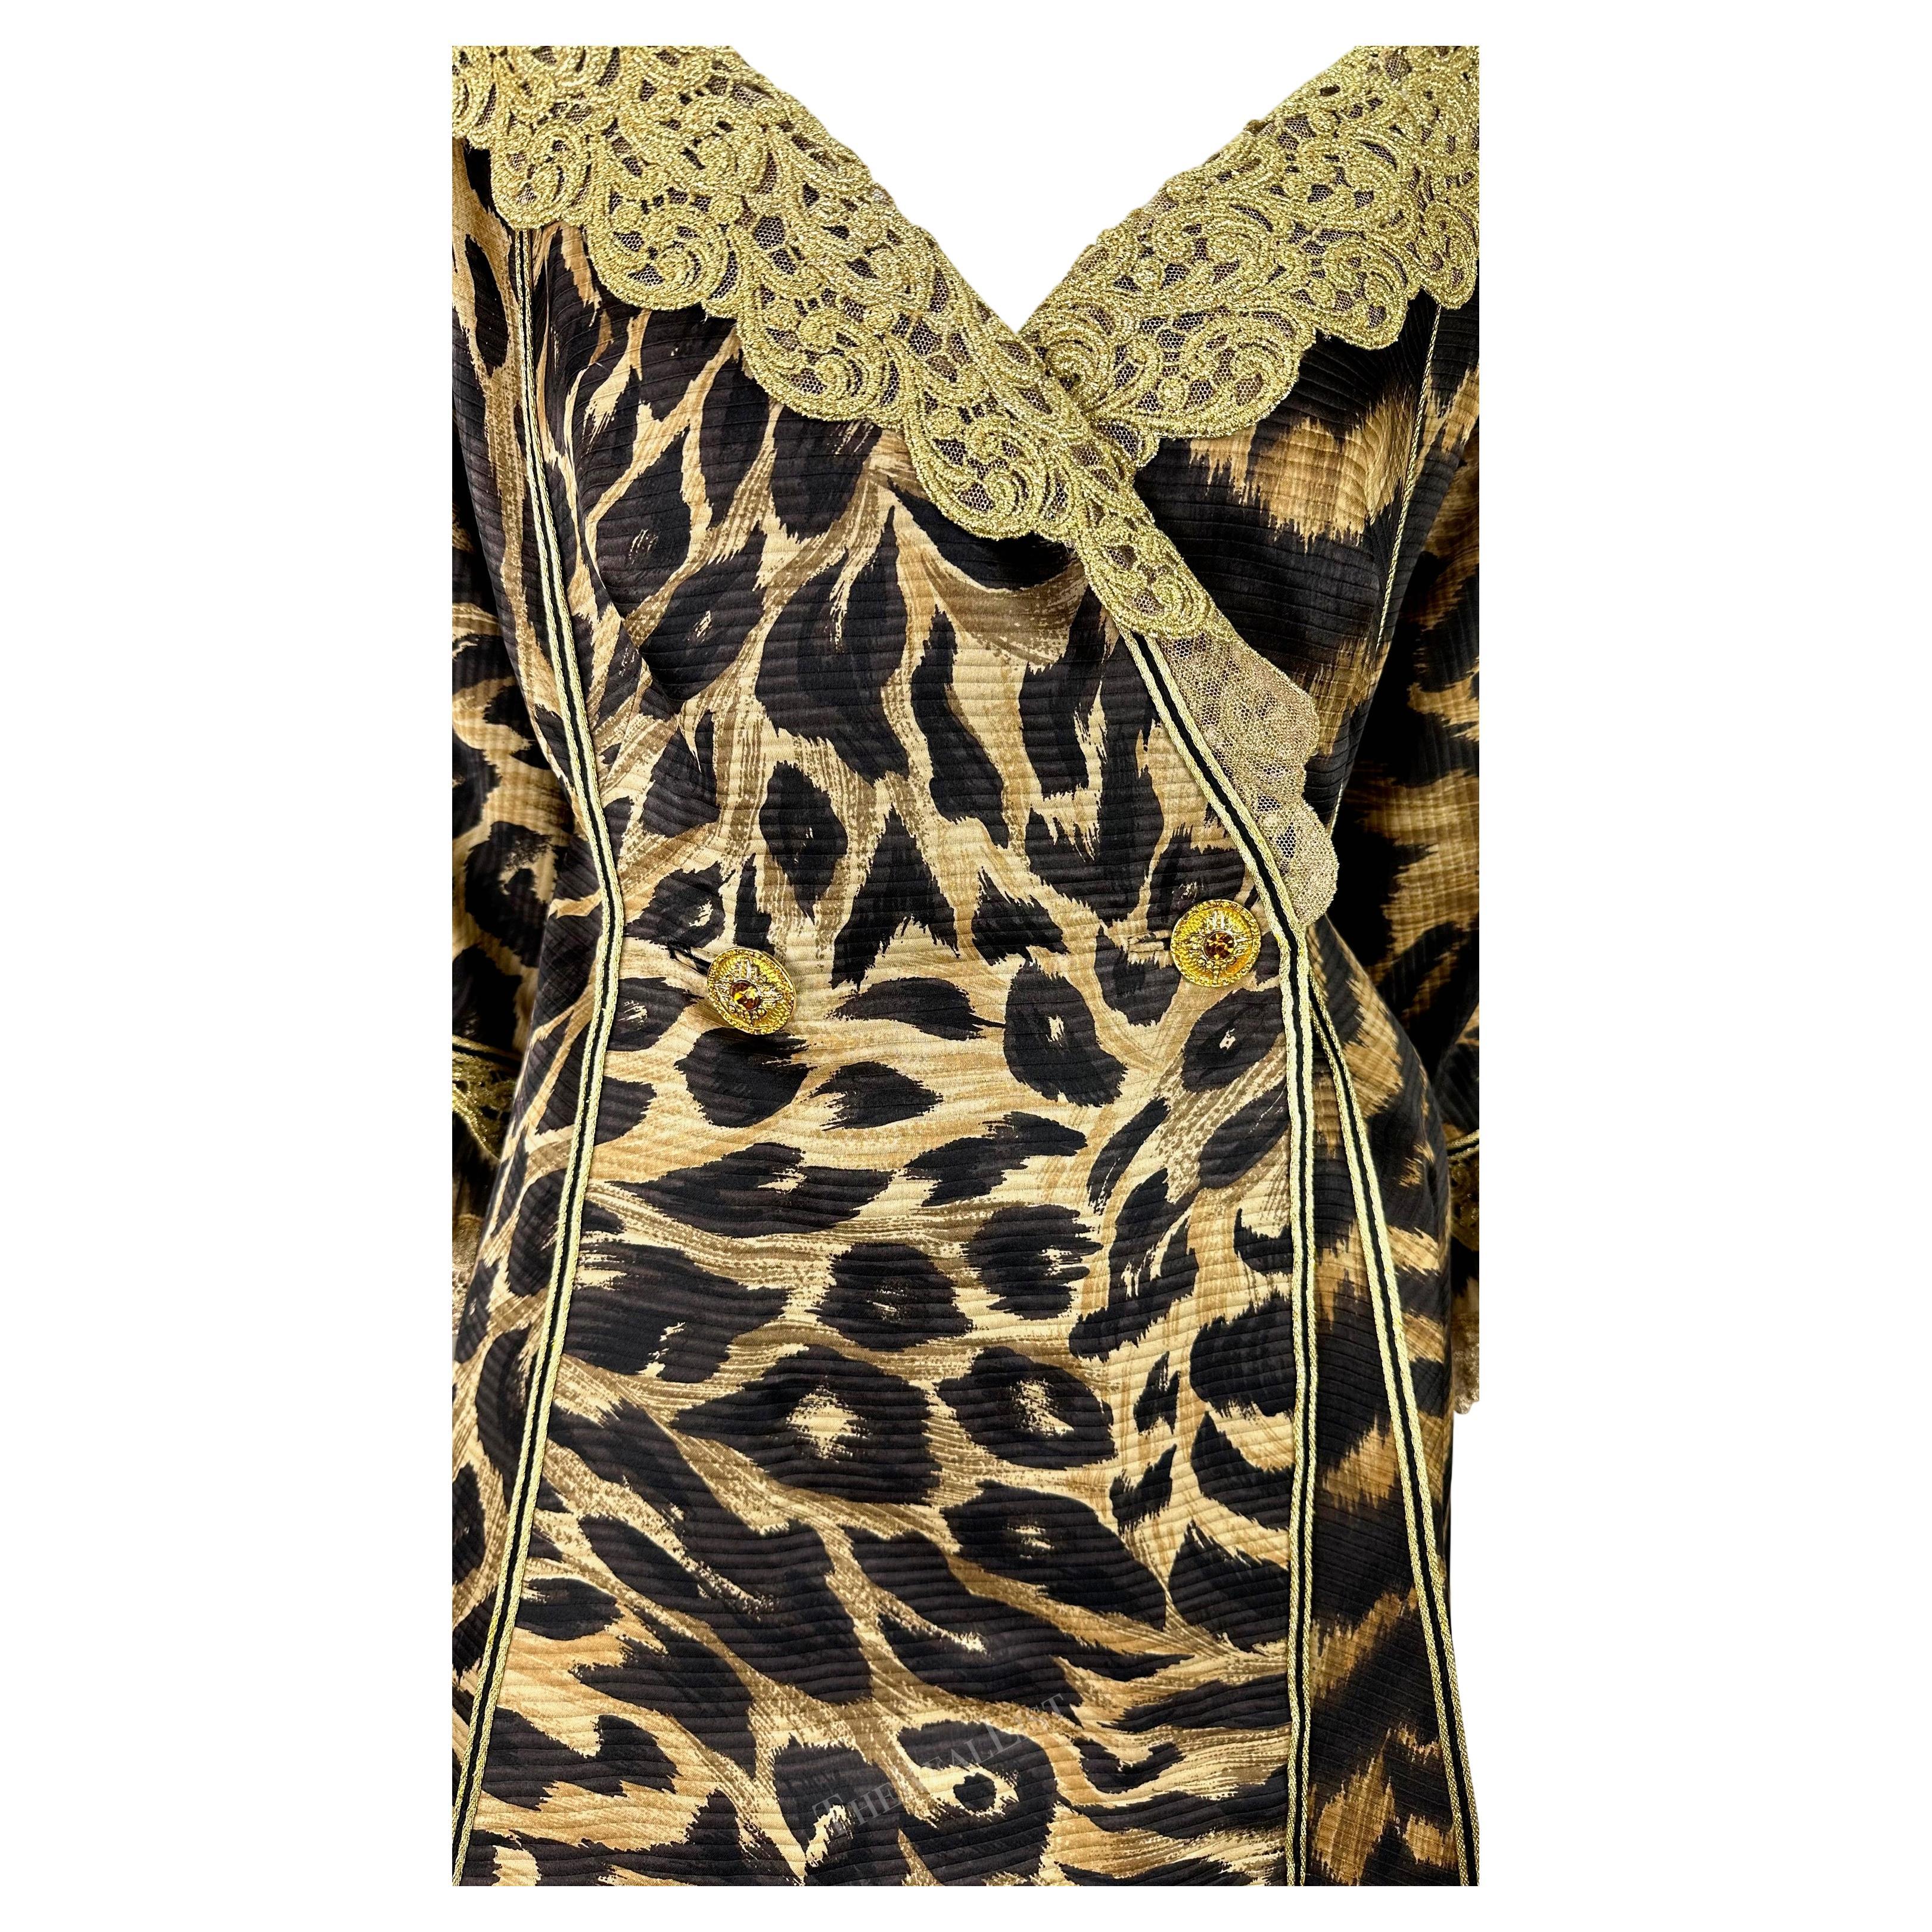 Women's S/S 1992 Atelier Versace Haute Couture Runway Leopard Silk Gold Lace Coat Dress For Sale